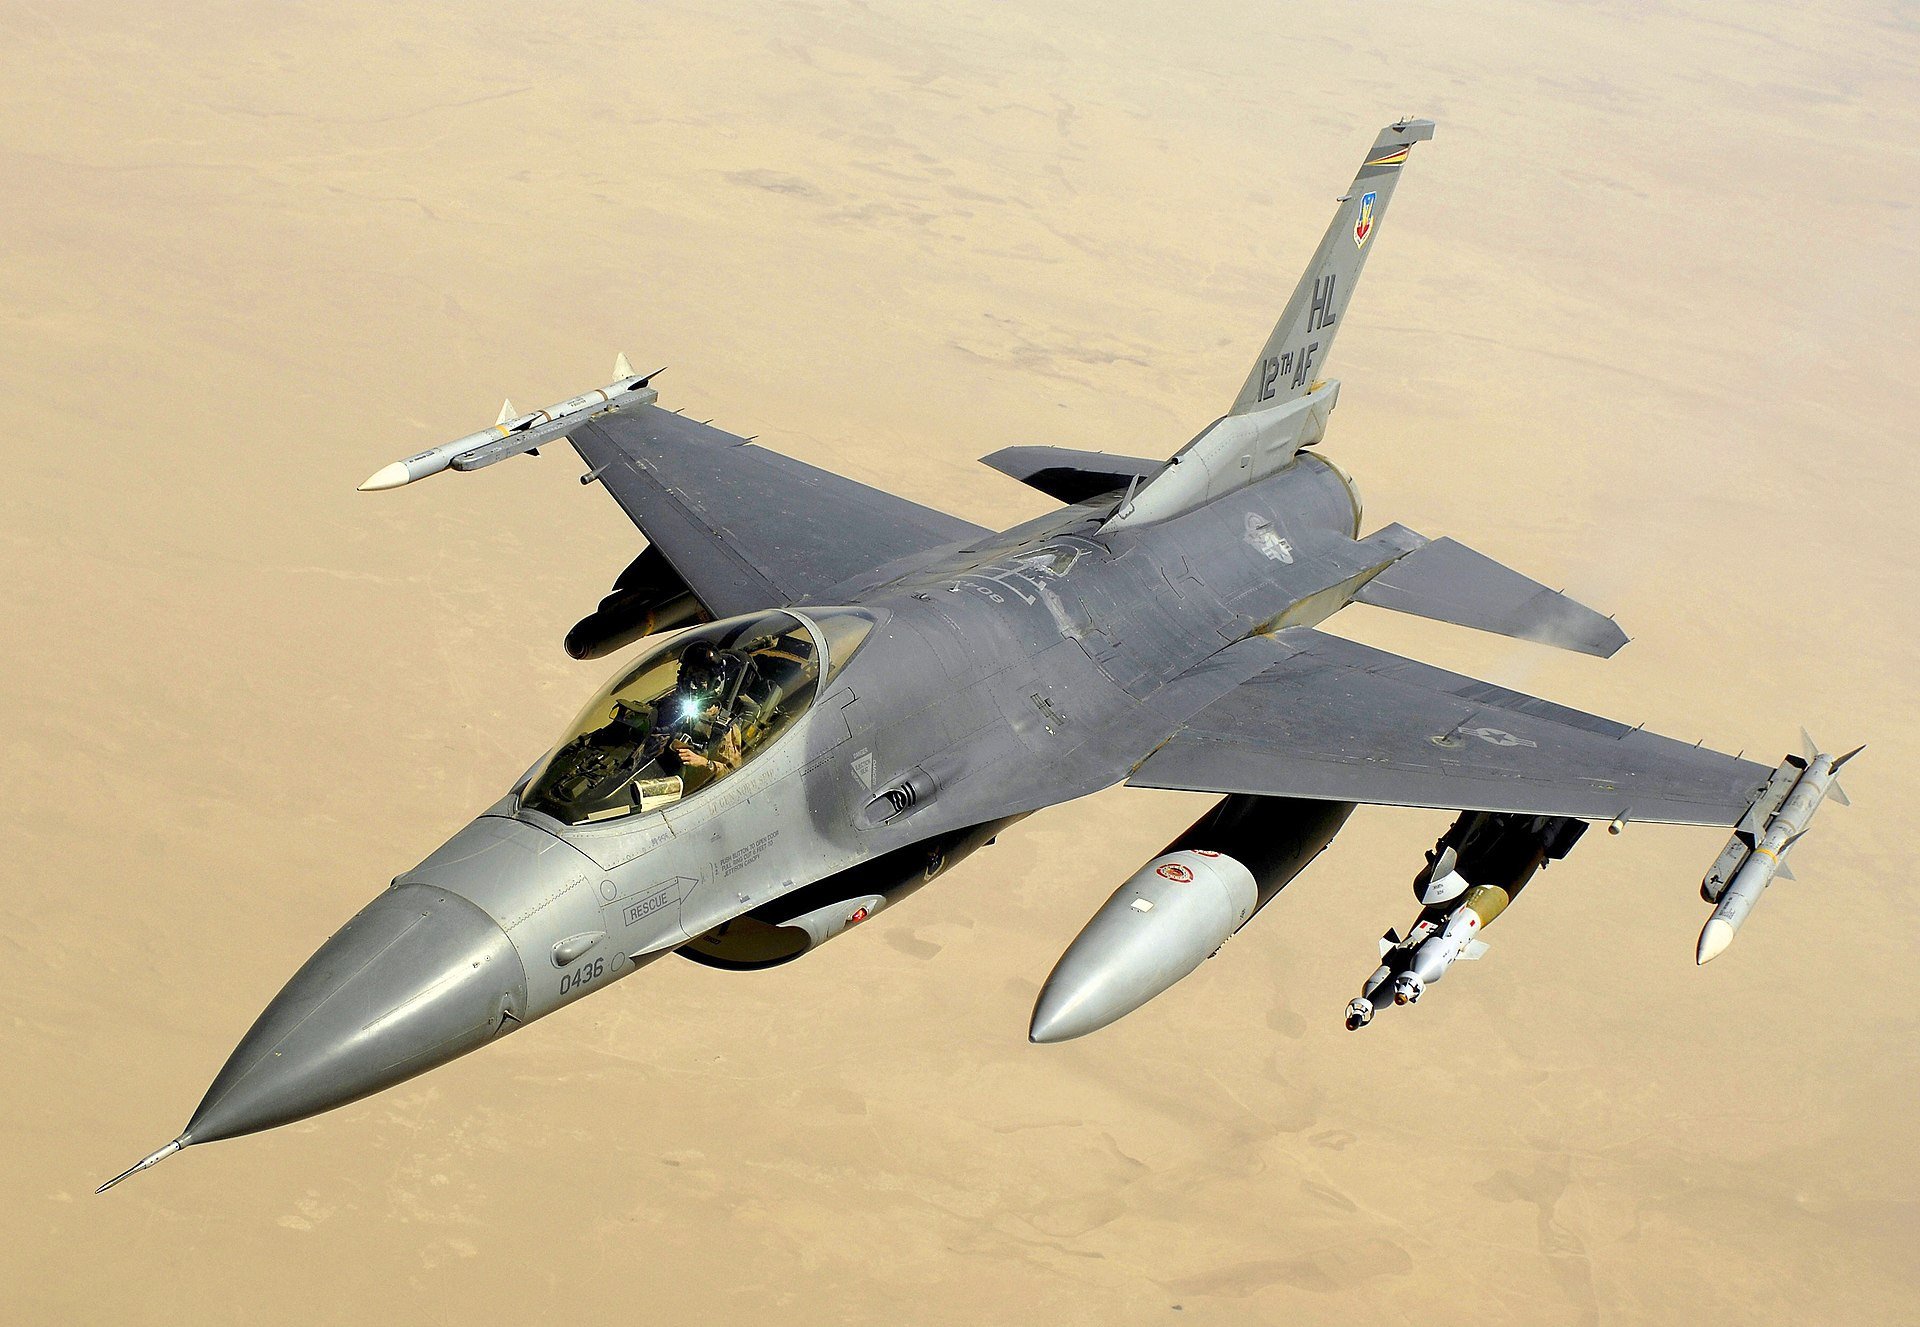 f-16 fighter jet